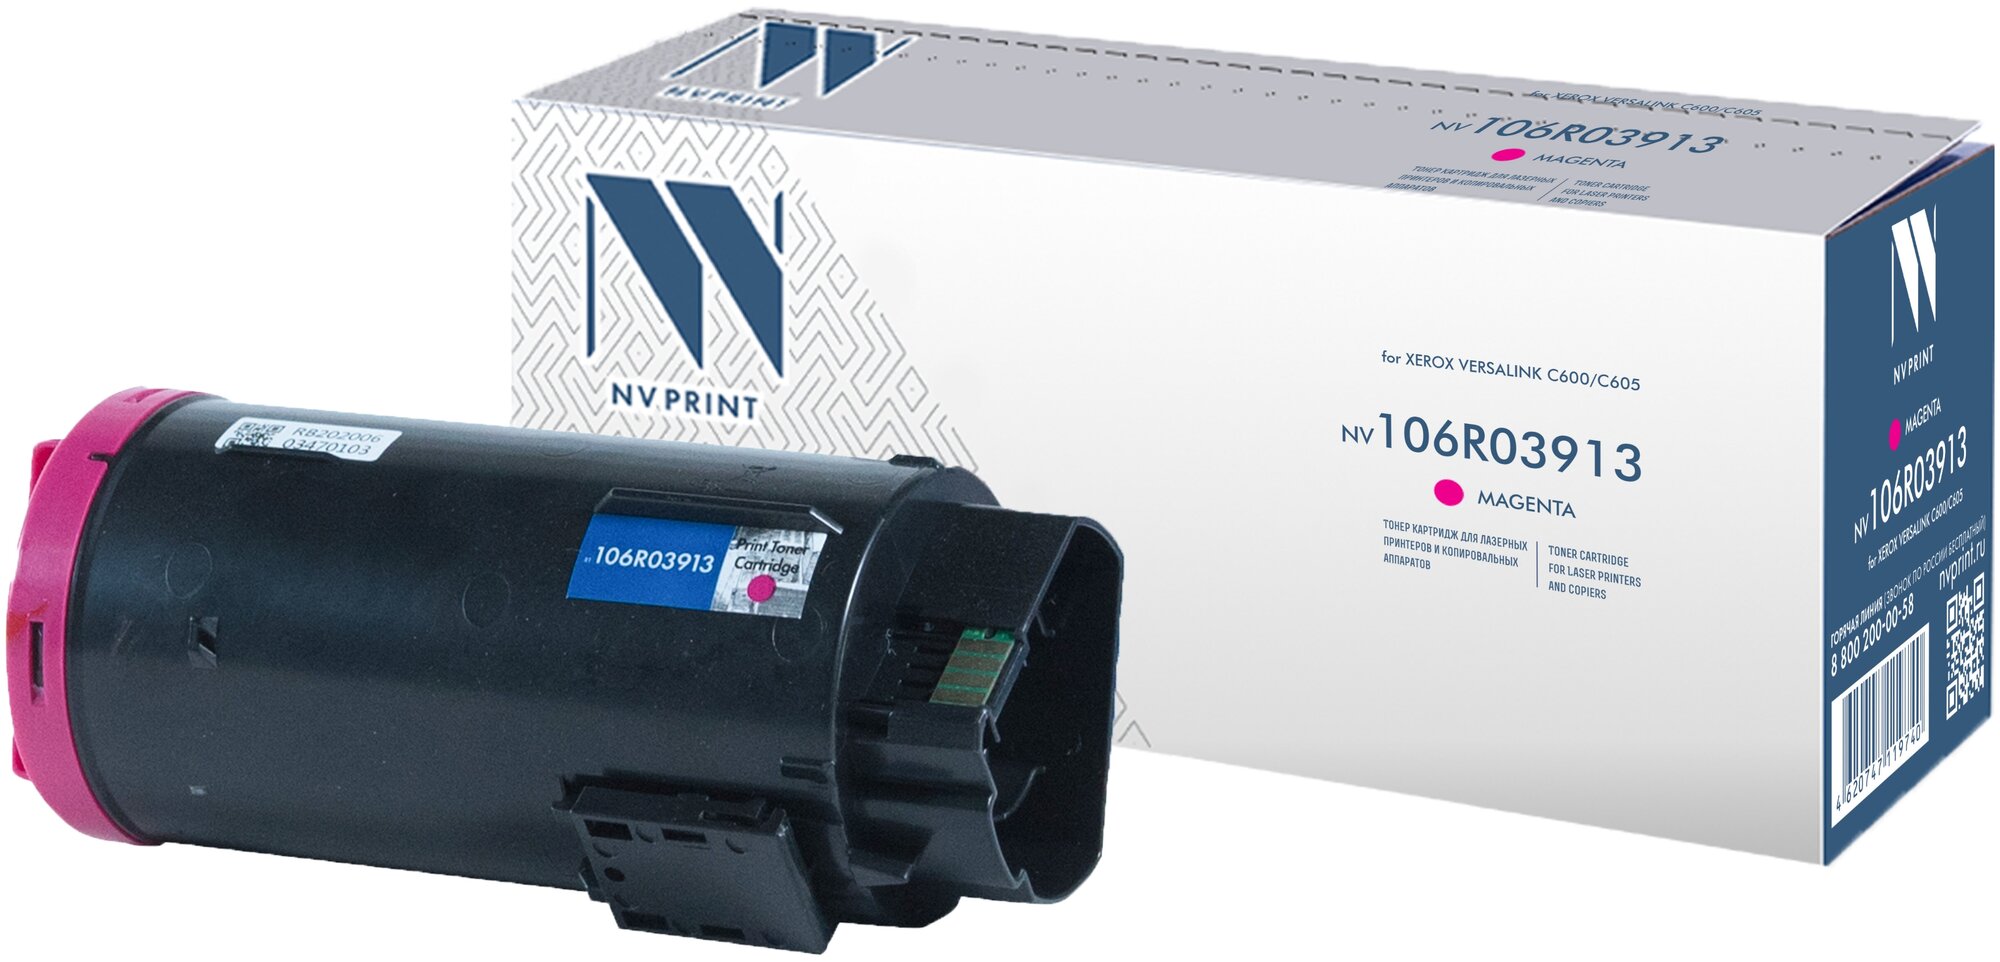 Лазерный картридж NV Print NV-106R03913M для для Xerox VersaLink C600, C605 (совместимый, пурпурный, 10100 стр.)